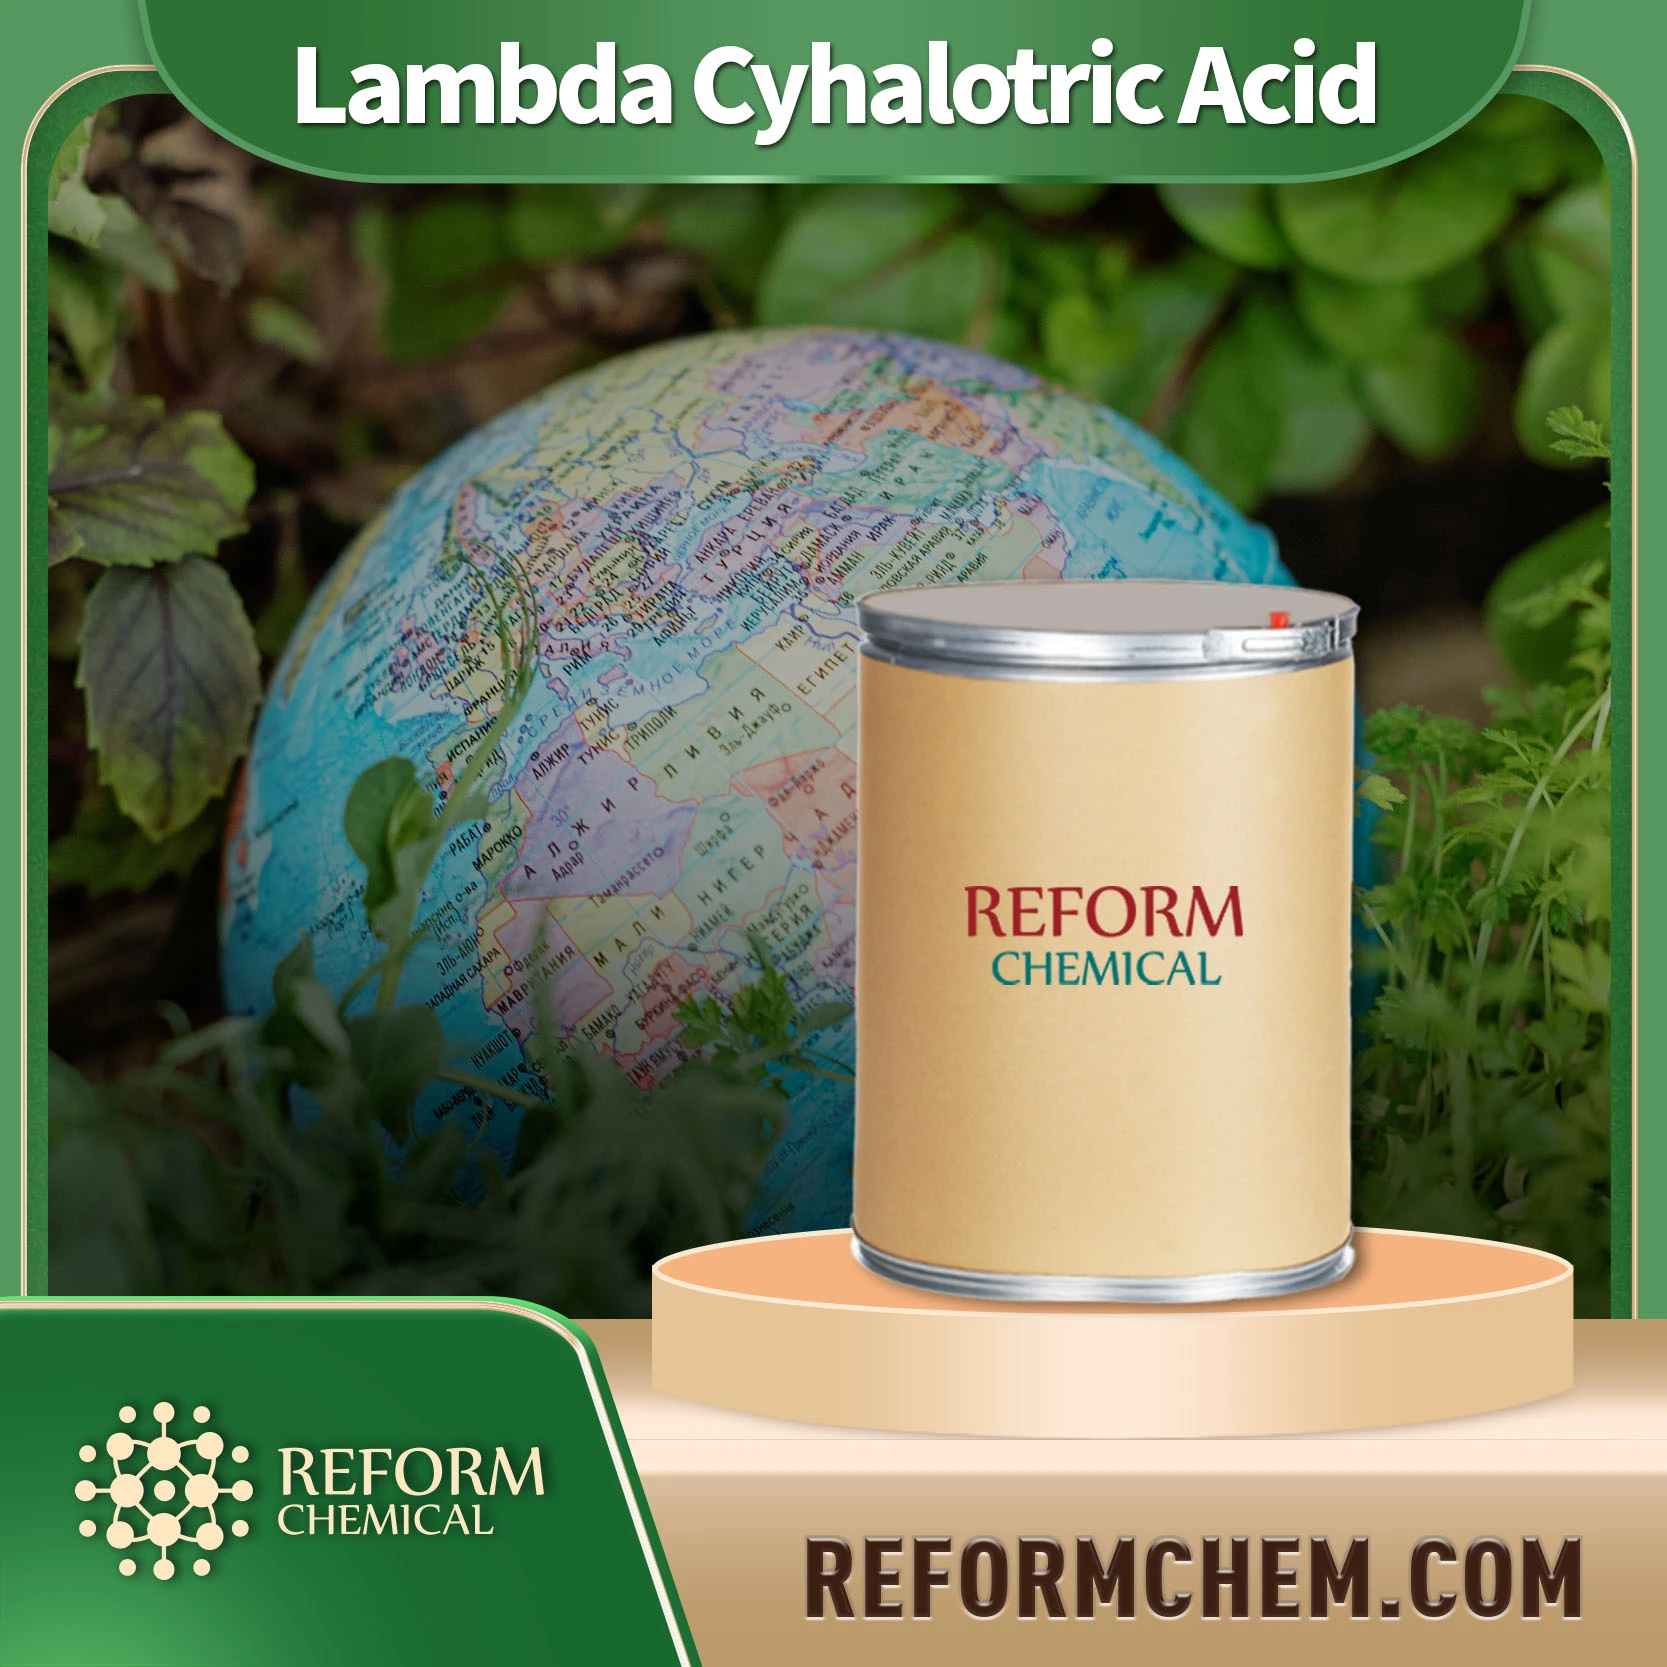 Lambda Cyhalotric Acid